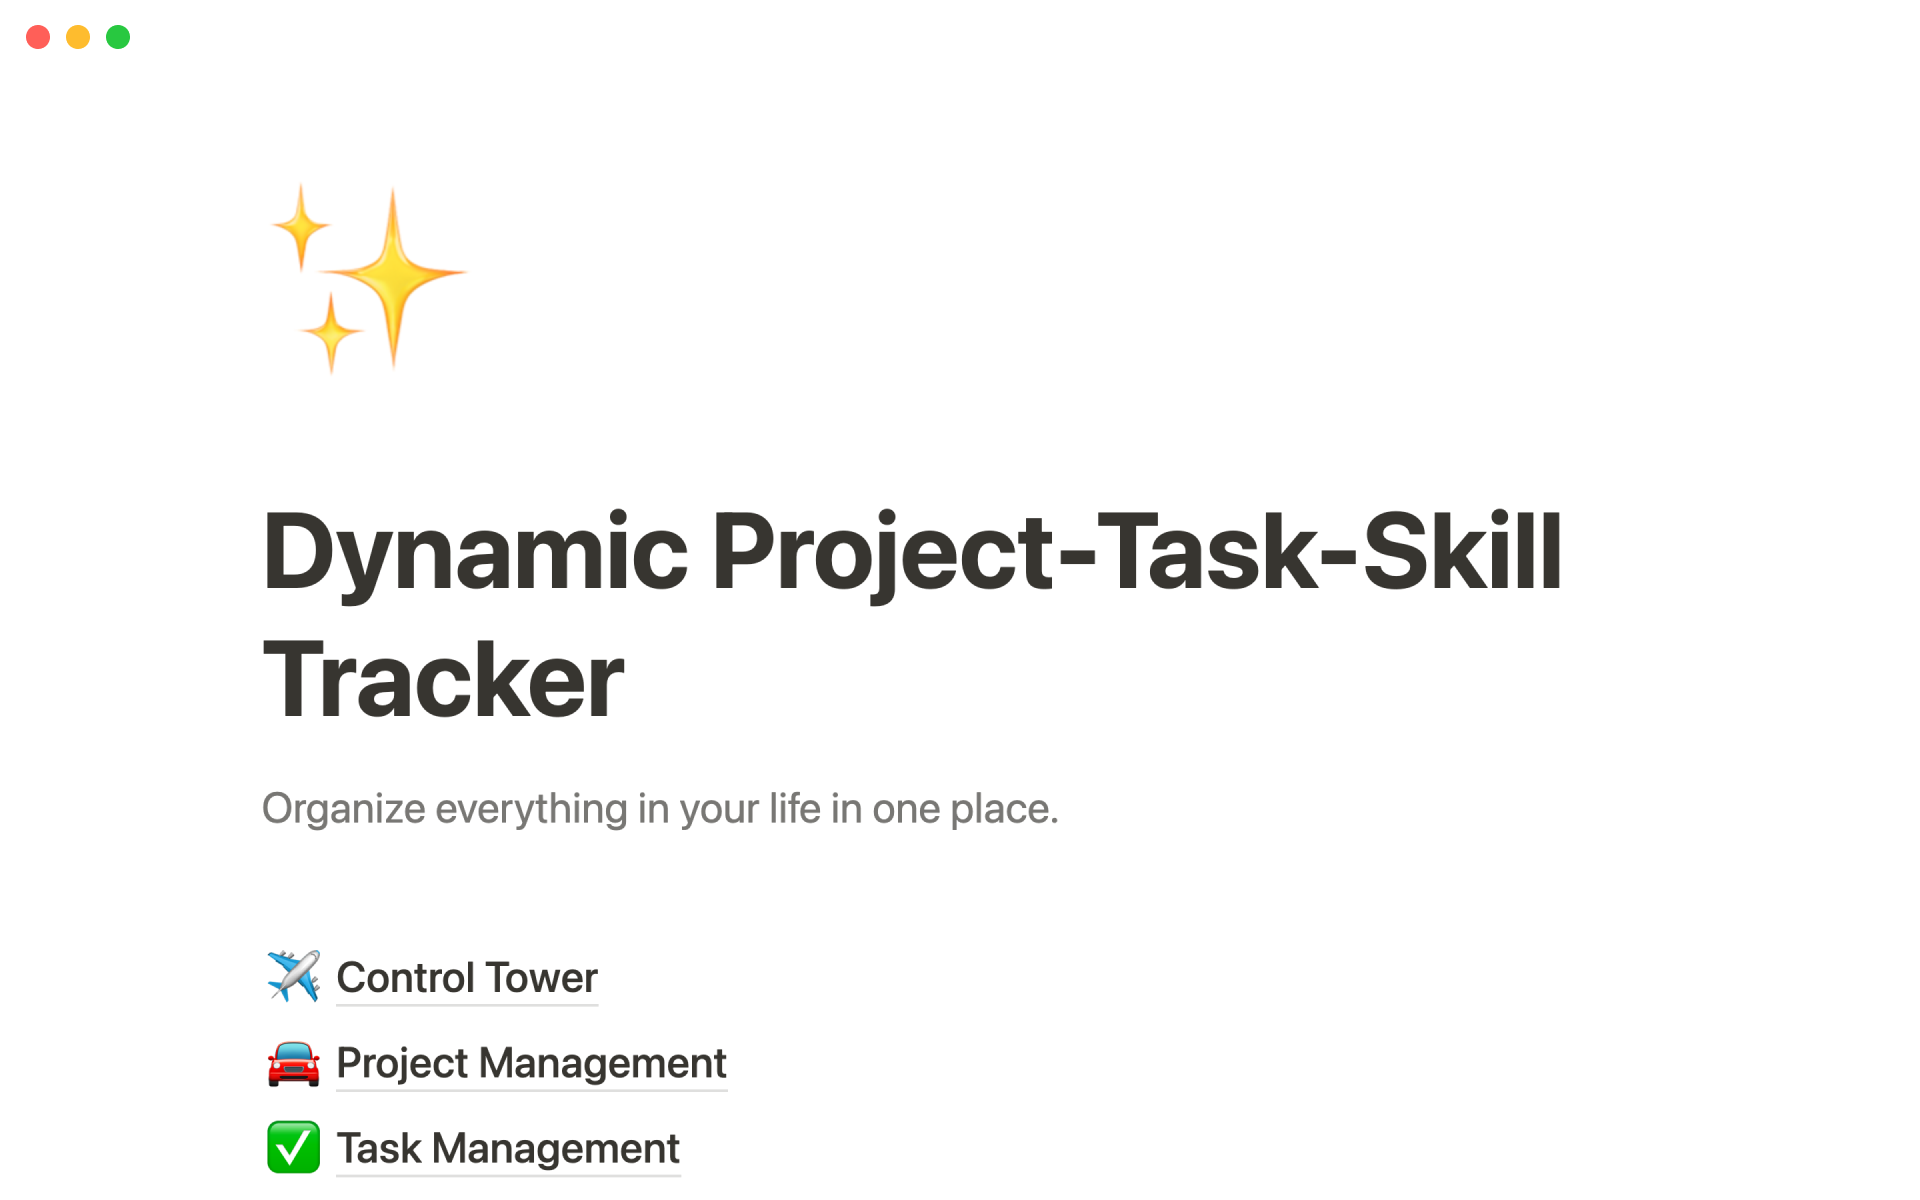 Dynamic project-task-skill tracker님의 템플릿 미리보기